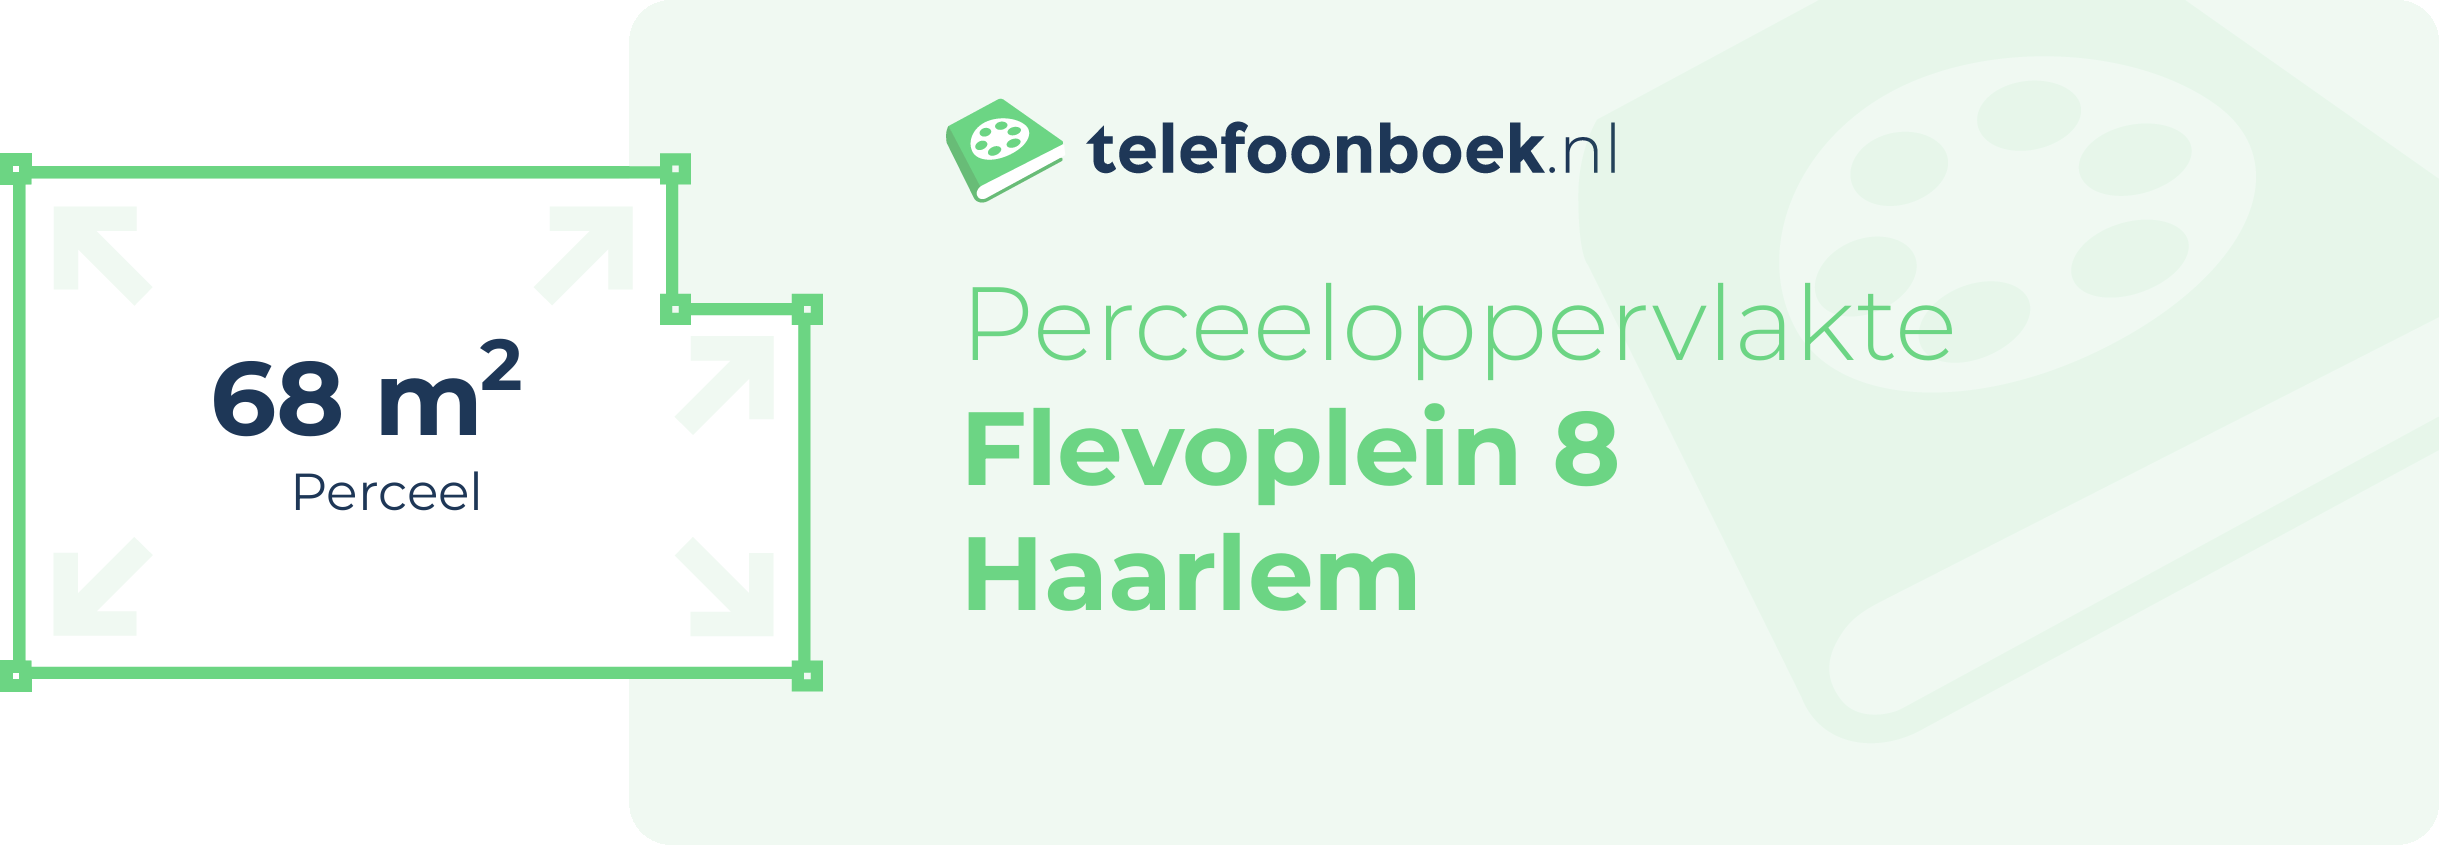 Perceeloppervlakte Flevoplein 8 Haarlem